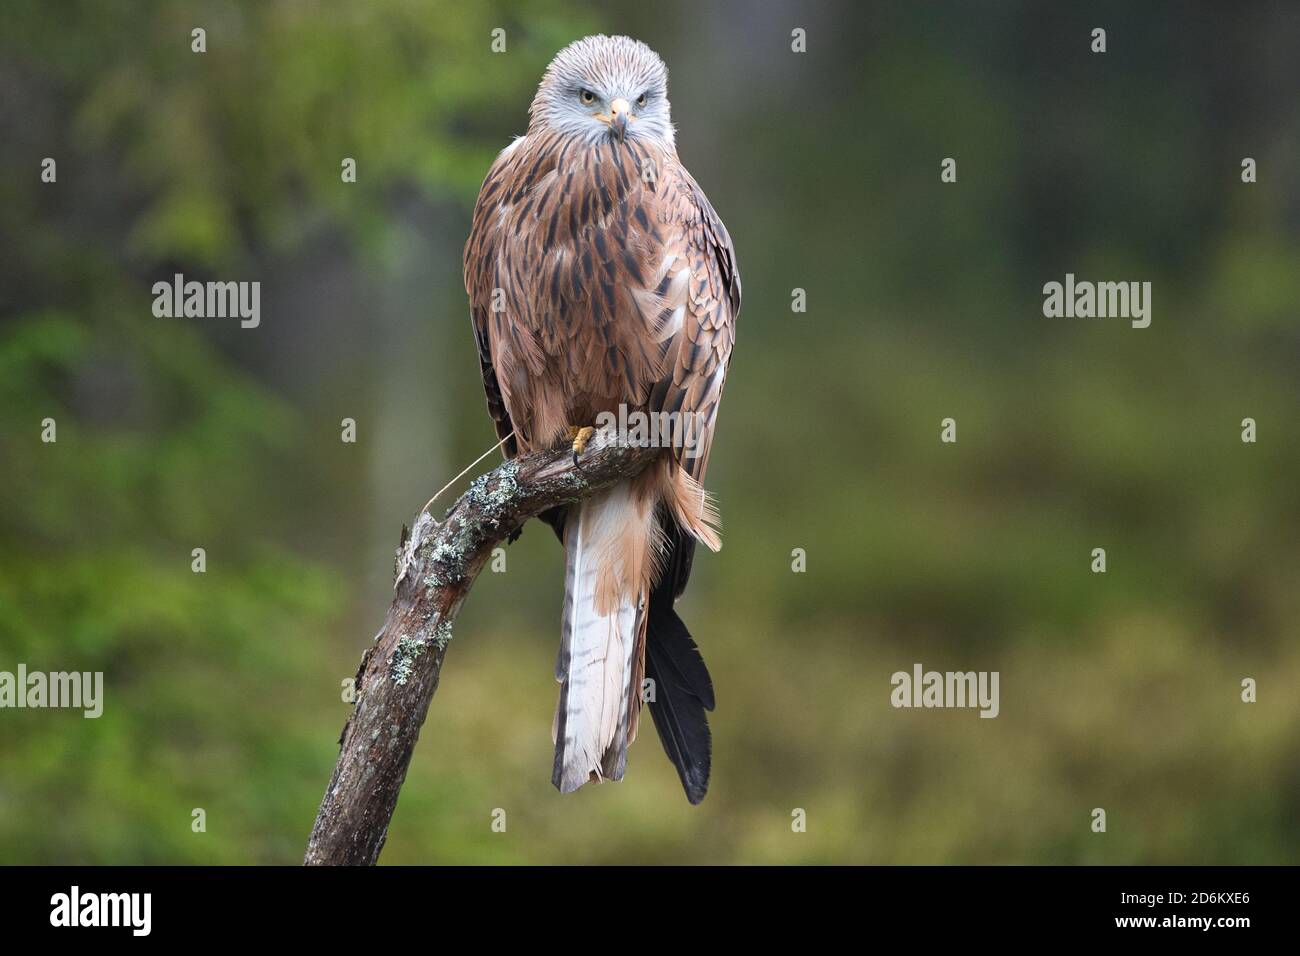 Vogel, Bird, Greifvogel, Bird of Prey, Milvus milvus, Roter Milan, Red kite, Predator, Hunter, fauna Stock Photo